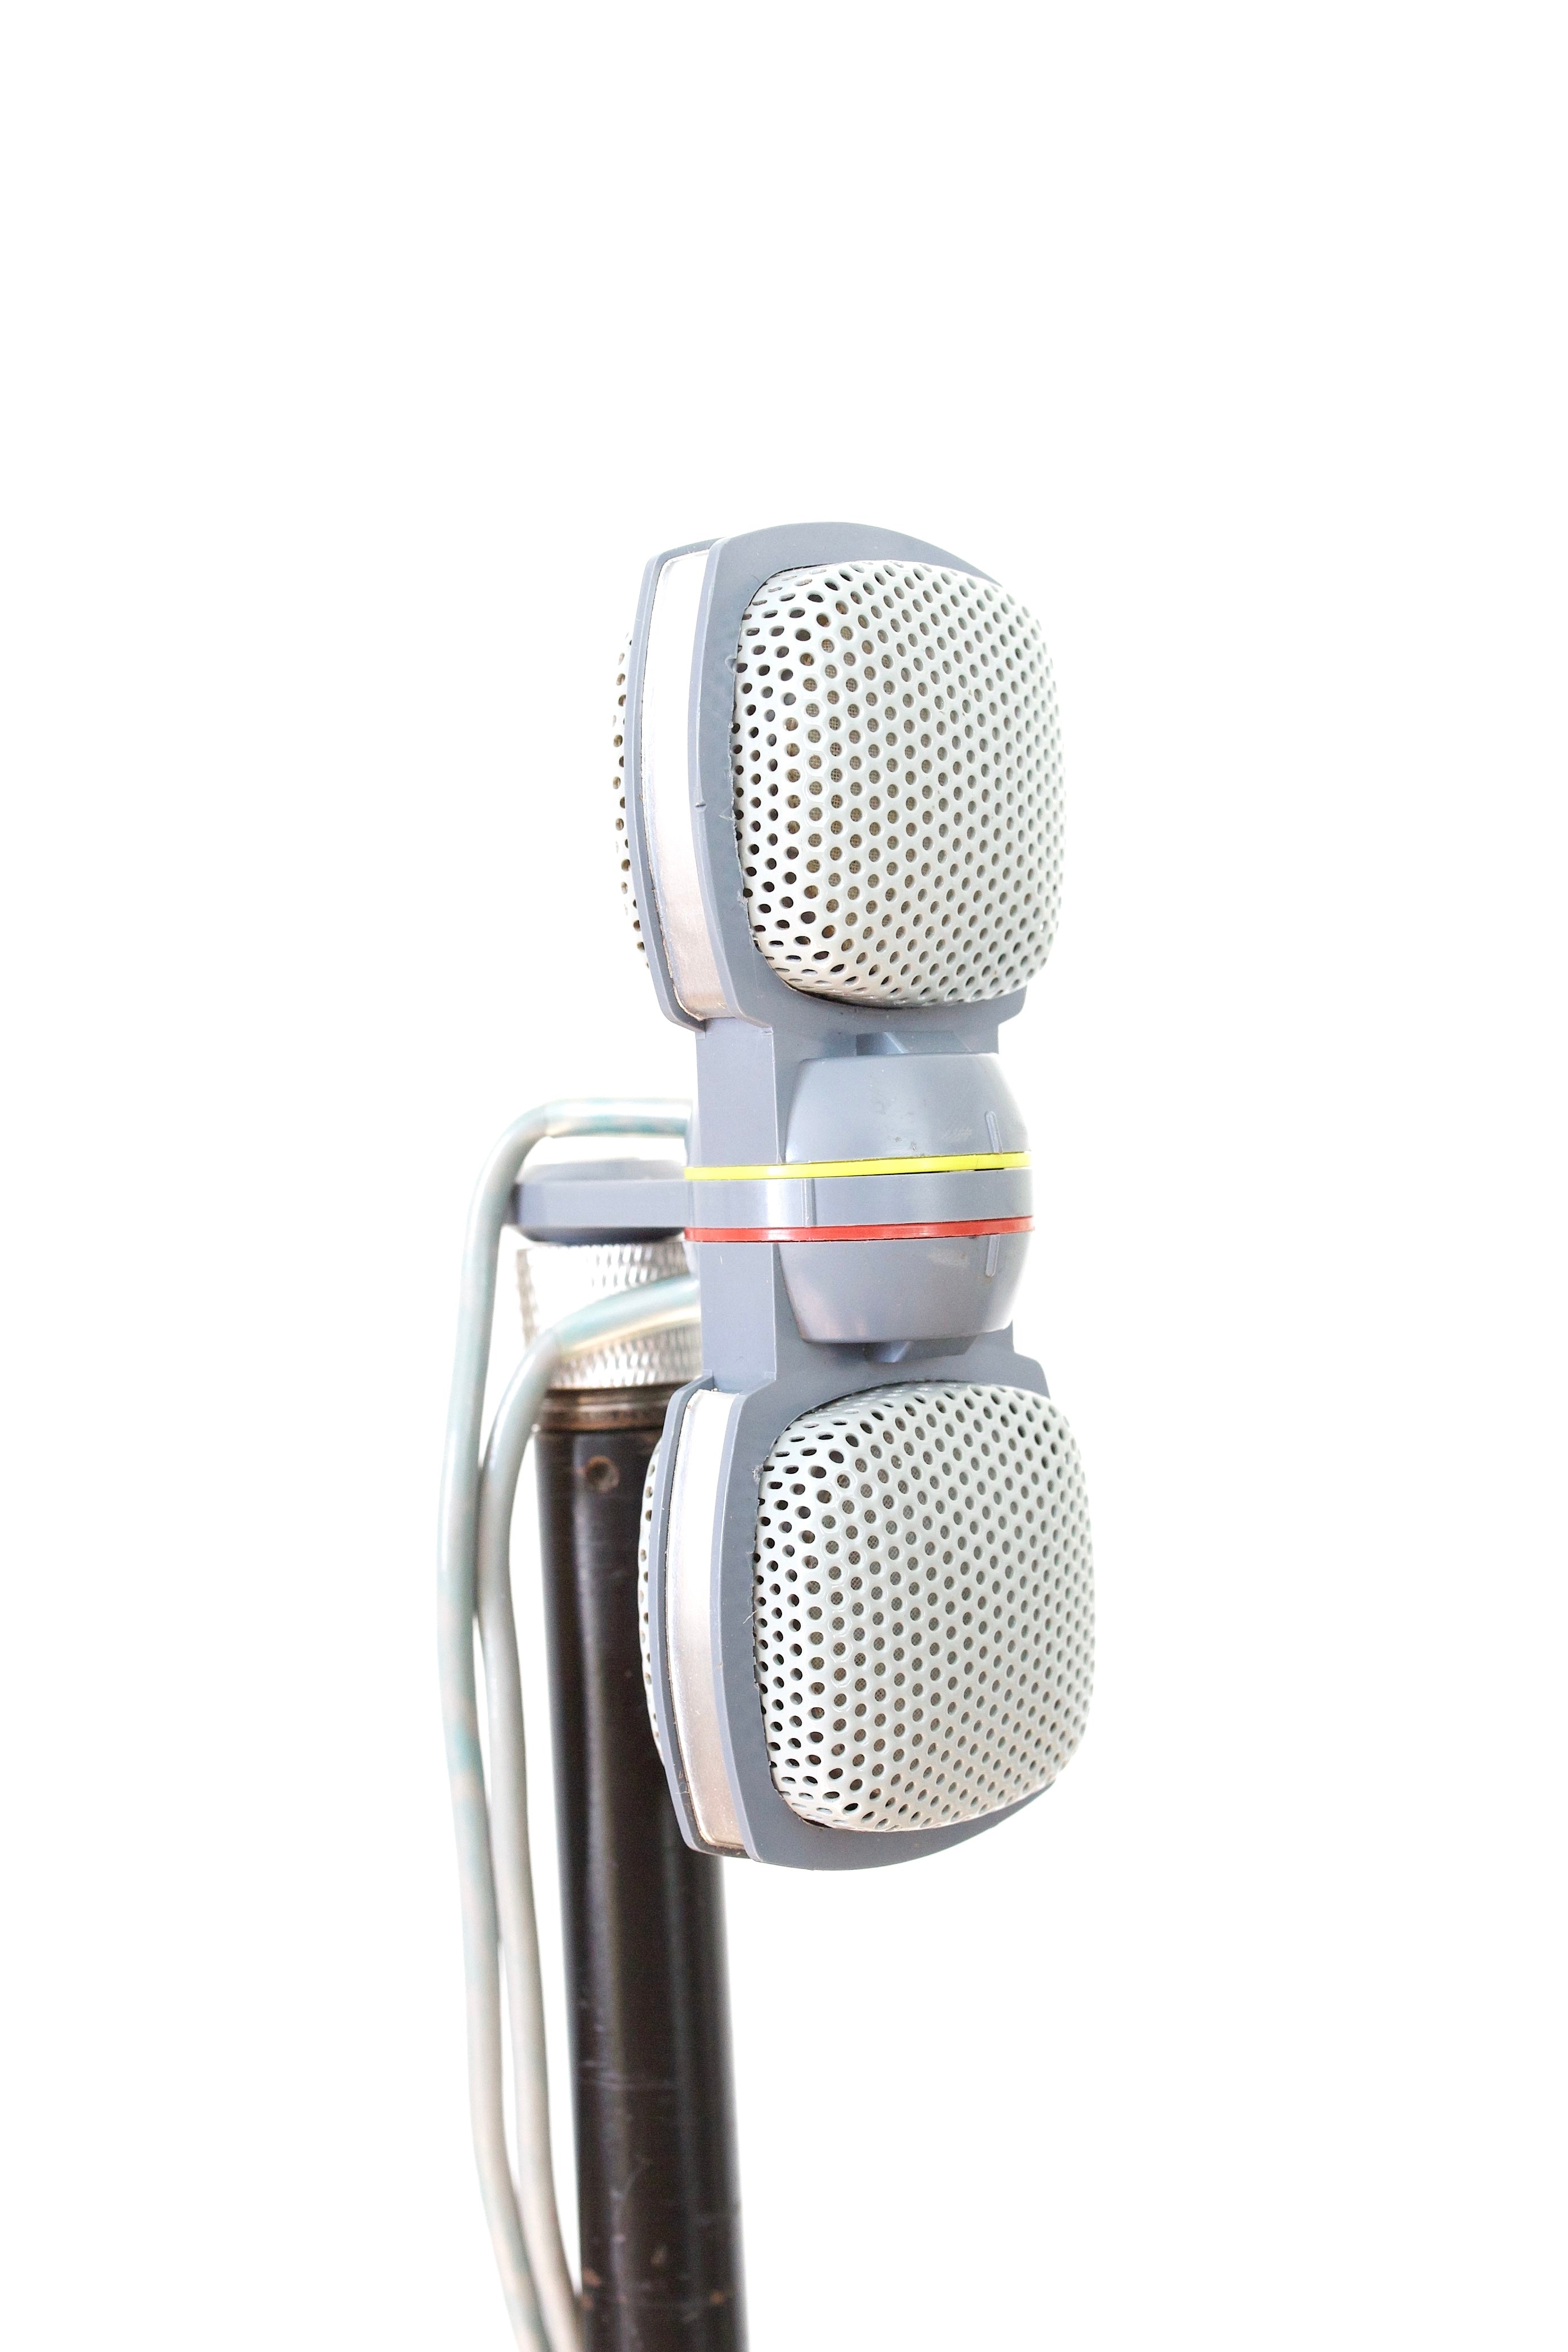 Grundig GDSM202 Stereo Dynamic Microphone